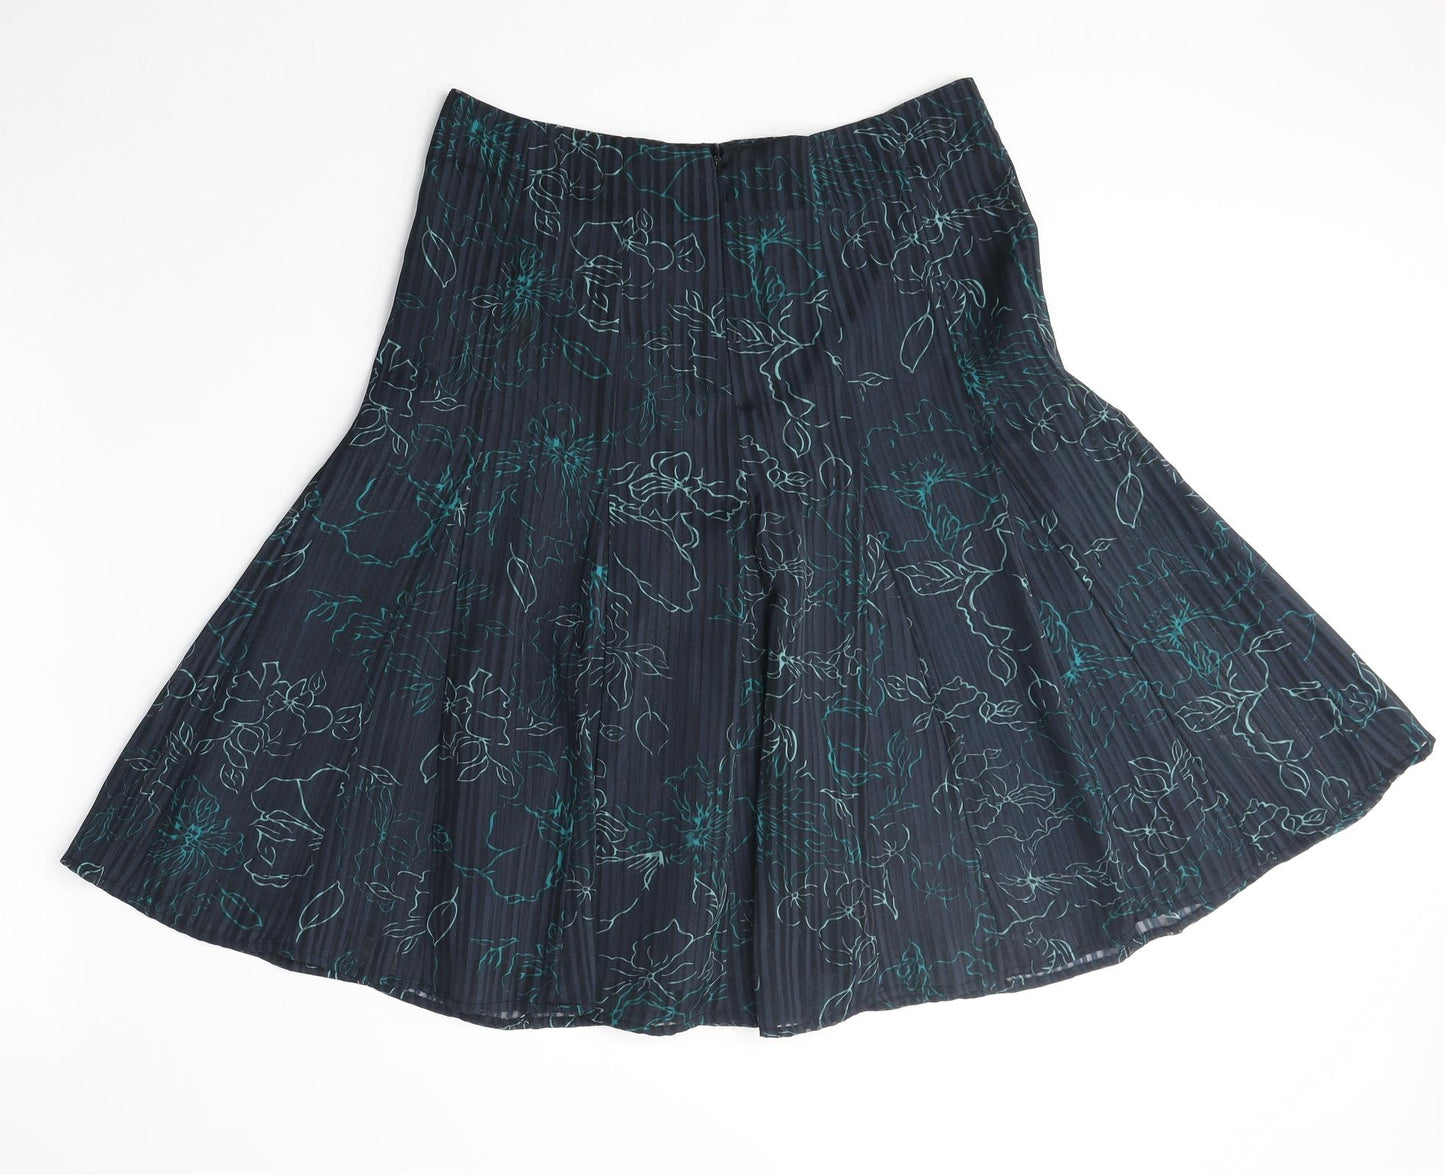 b.young Womens Black Geometric Polyester Swing Skirt Size M Zip